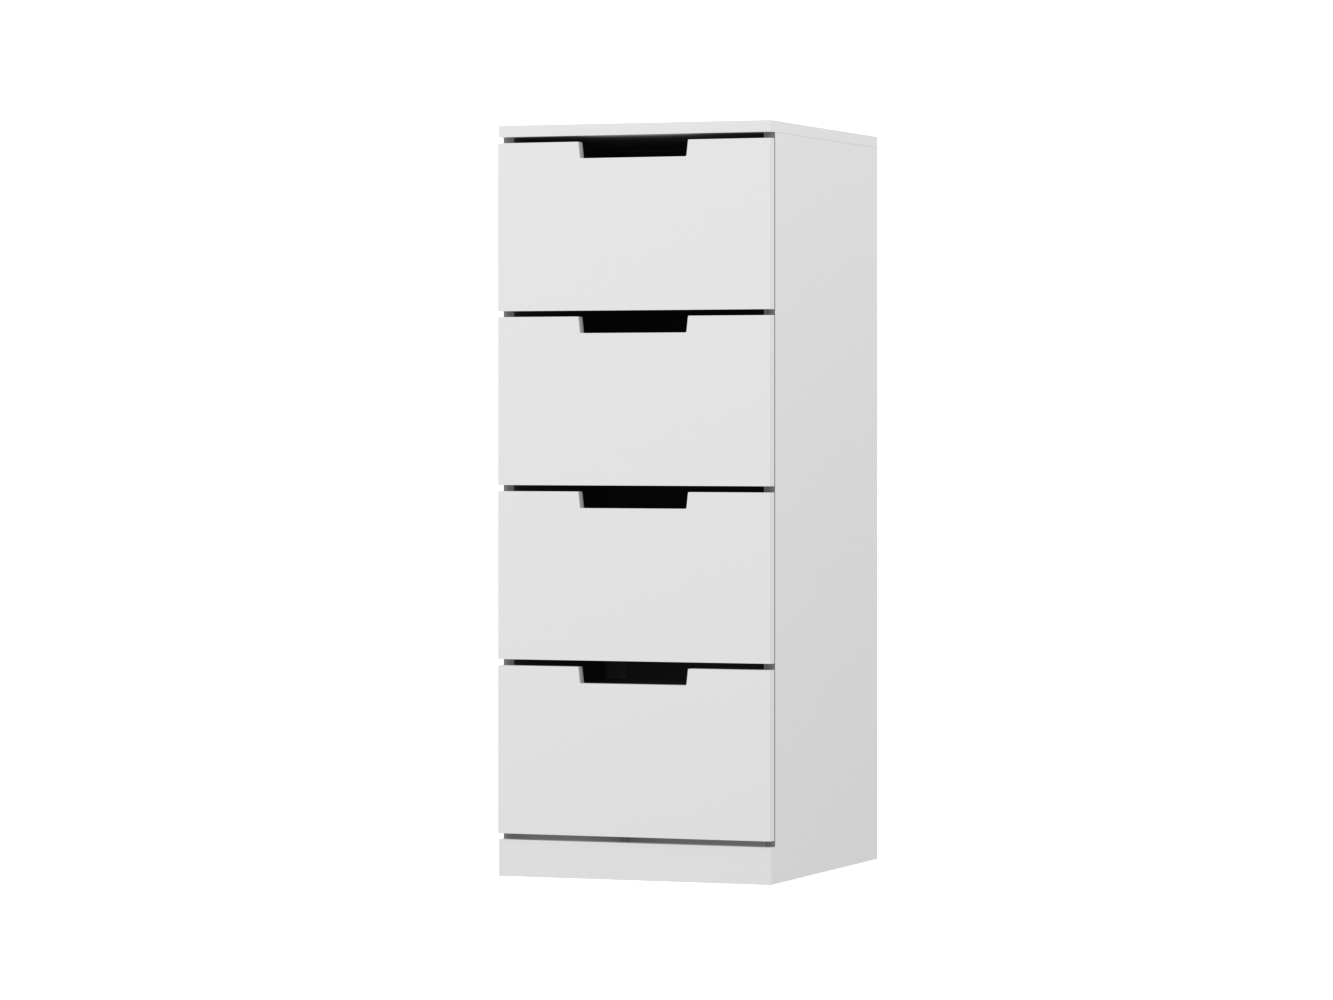 Изображение товара Комод Нордли 28 white ИКЕА (IKEA), 40x45x100 см на сайте adeta.ru